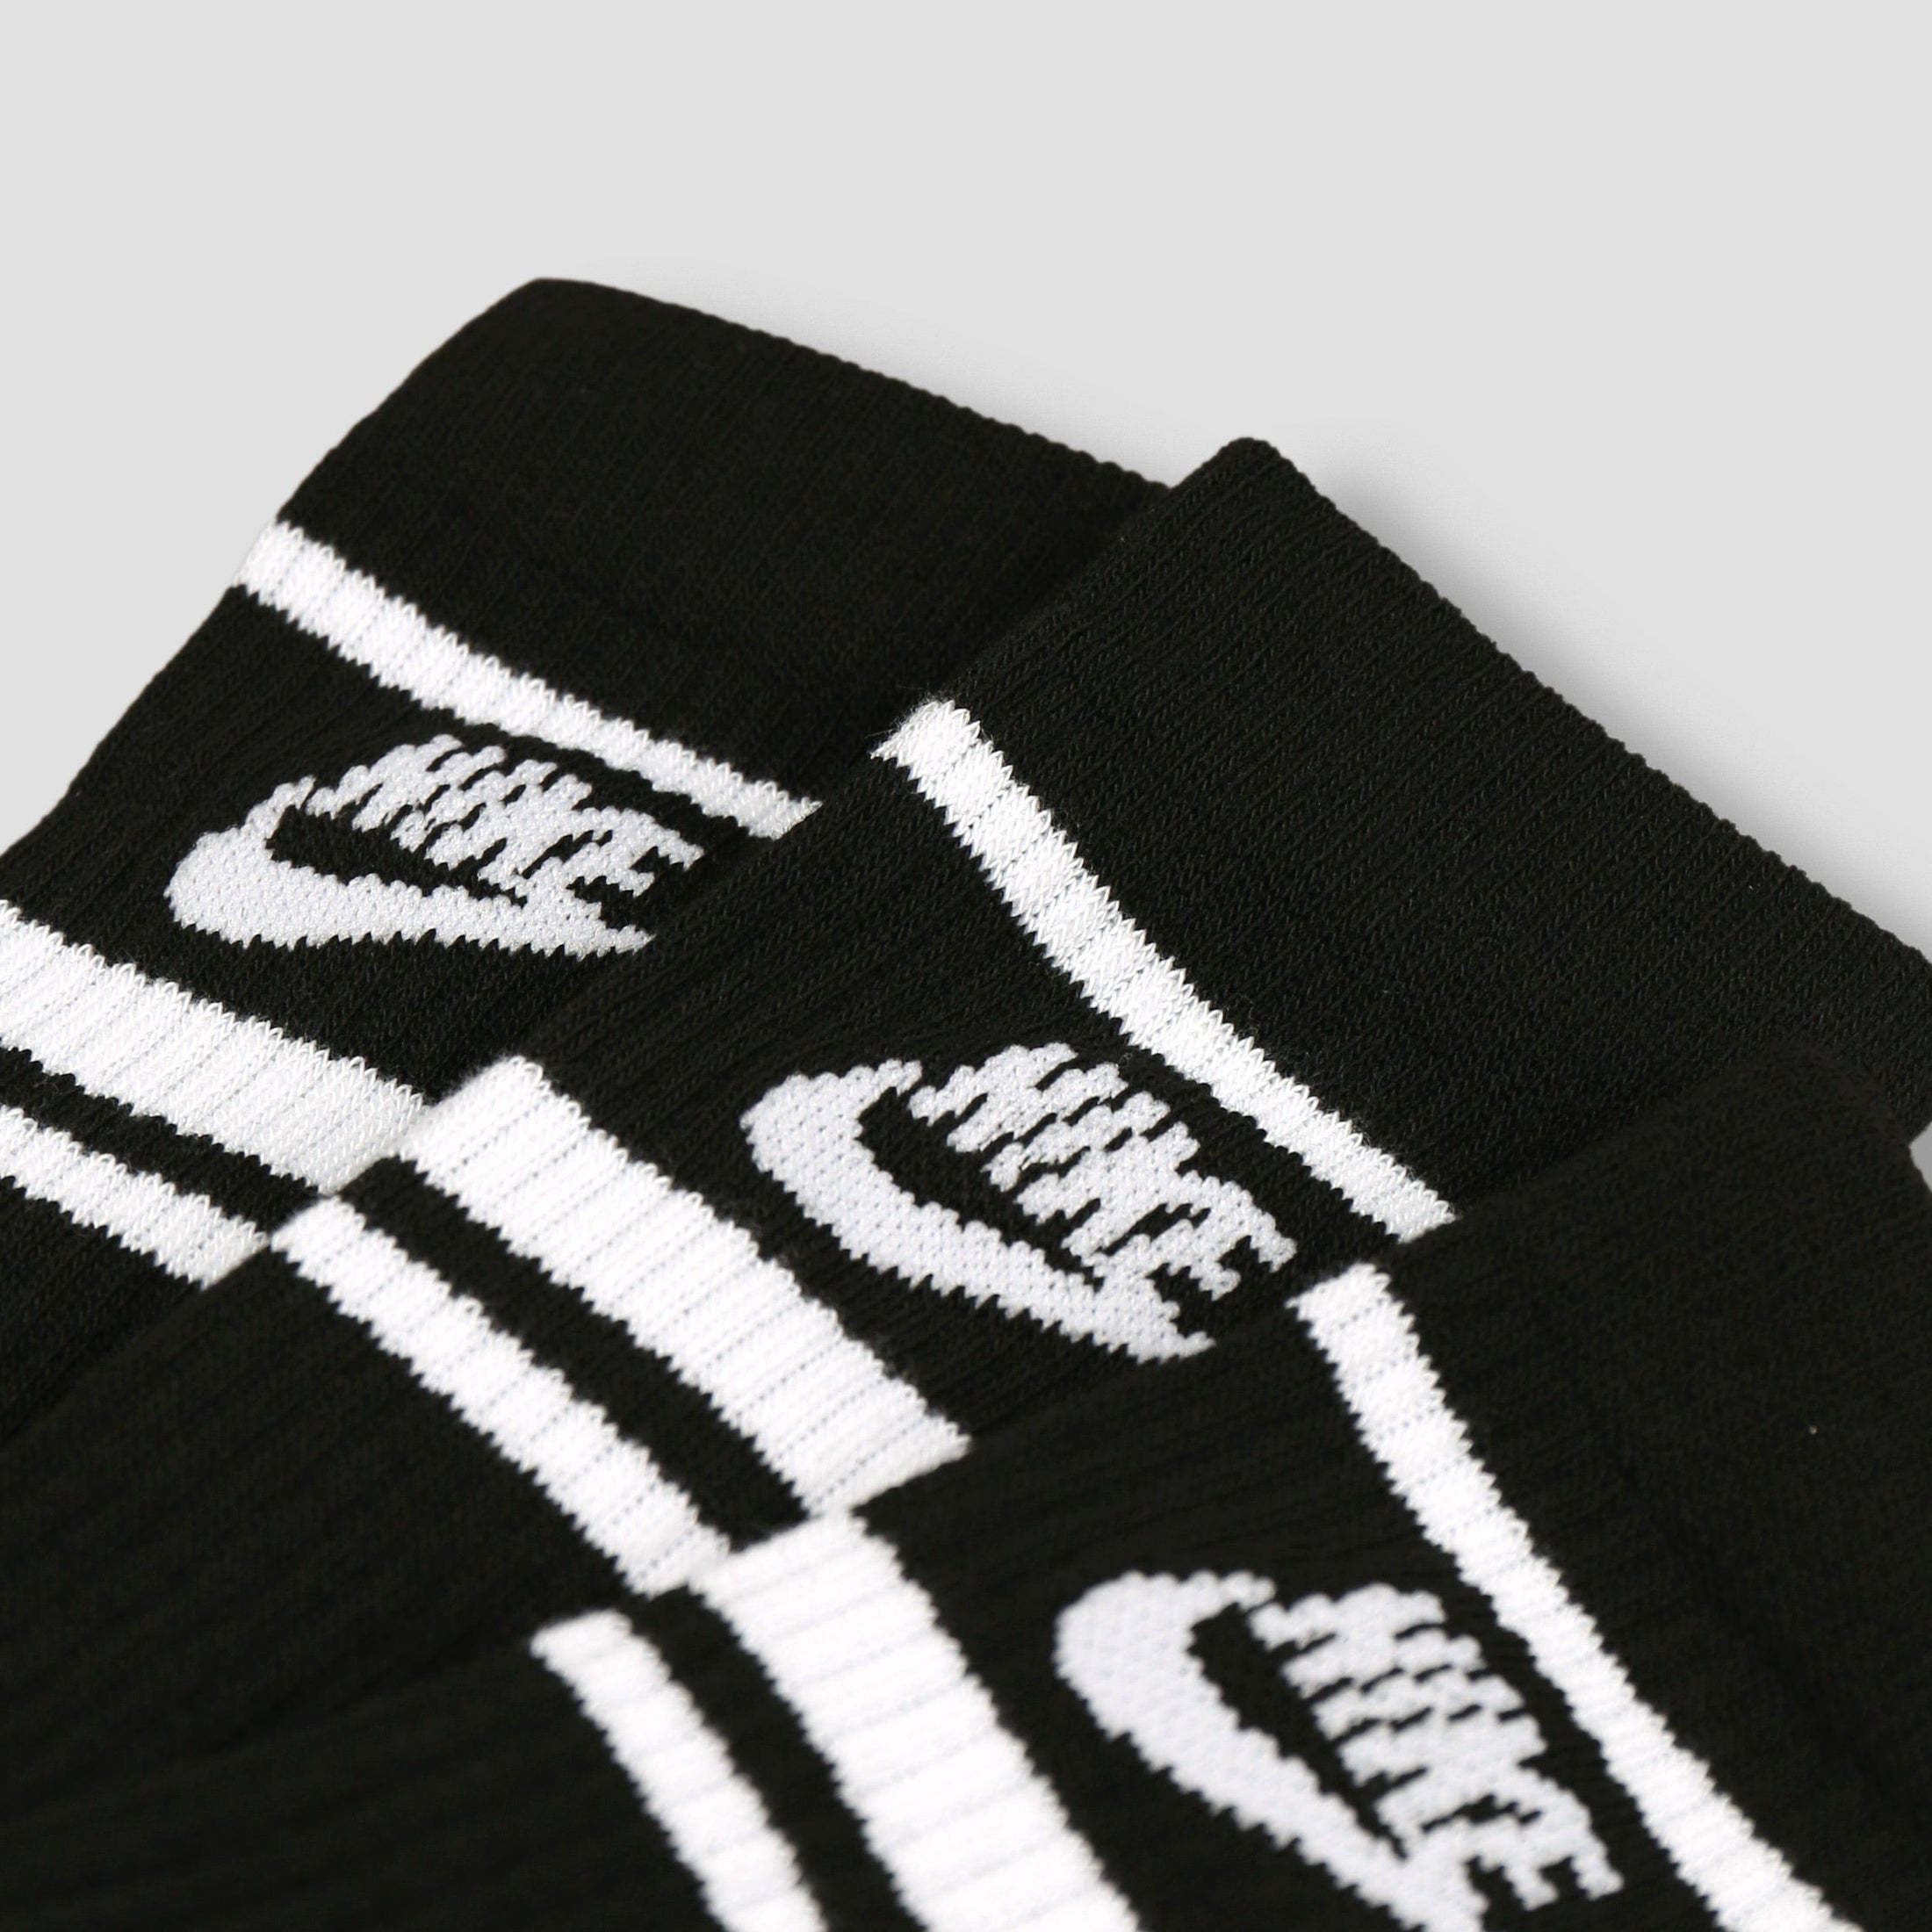 Nike Everyday Essential Stripe Crew Socks Black / White (3 Pack)